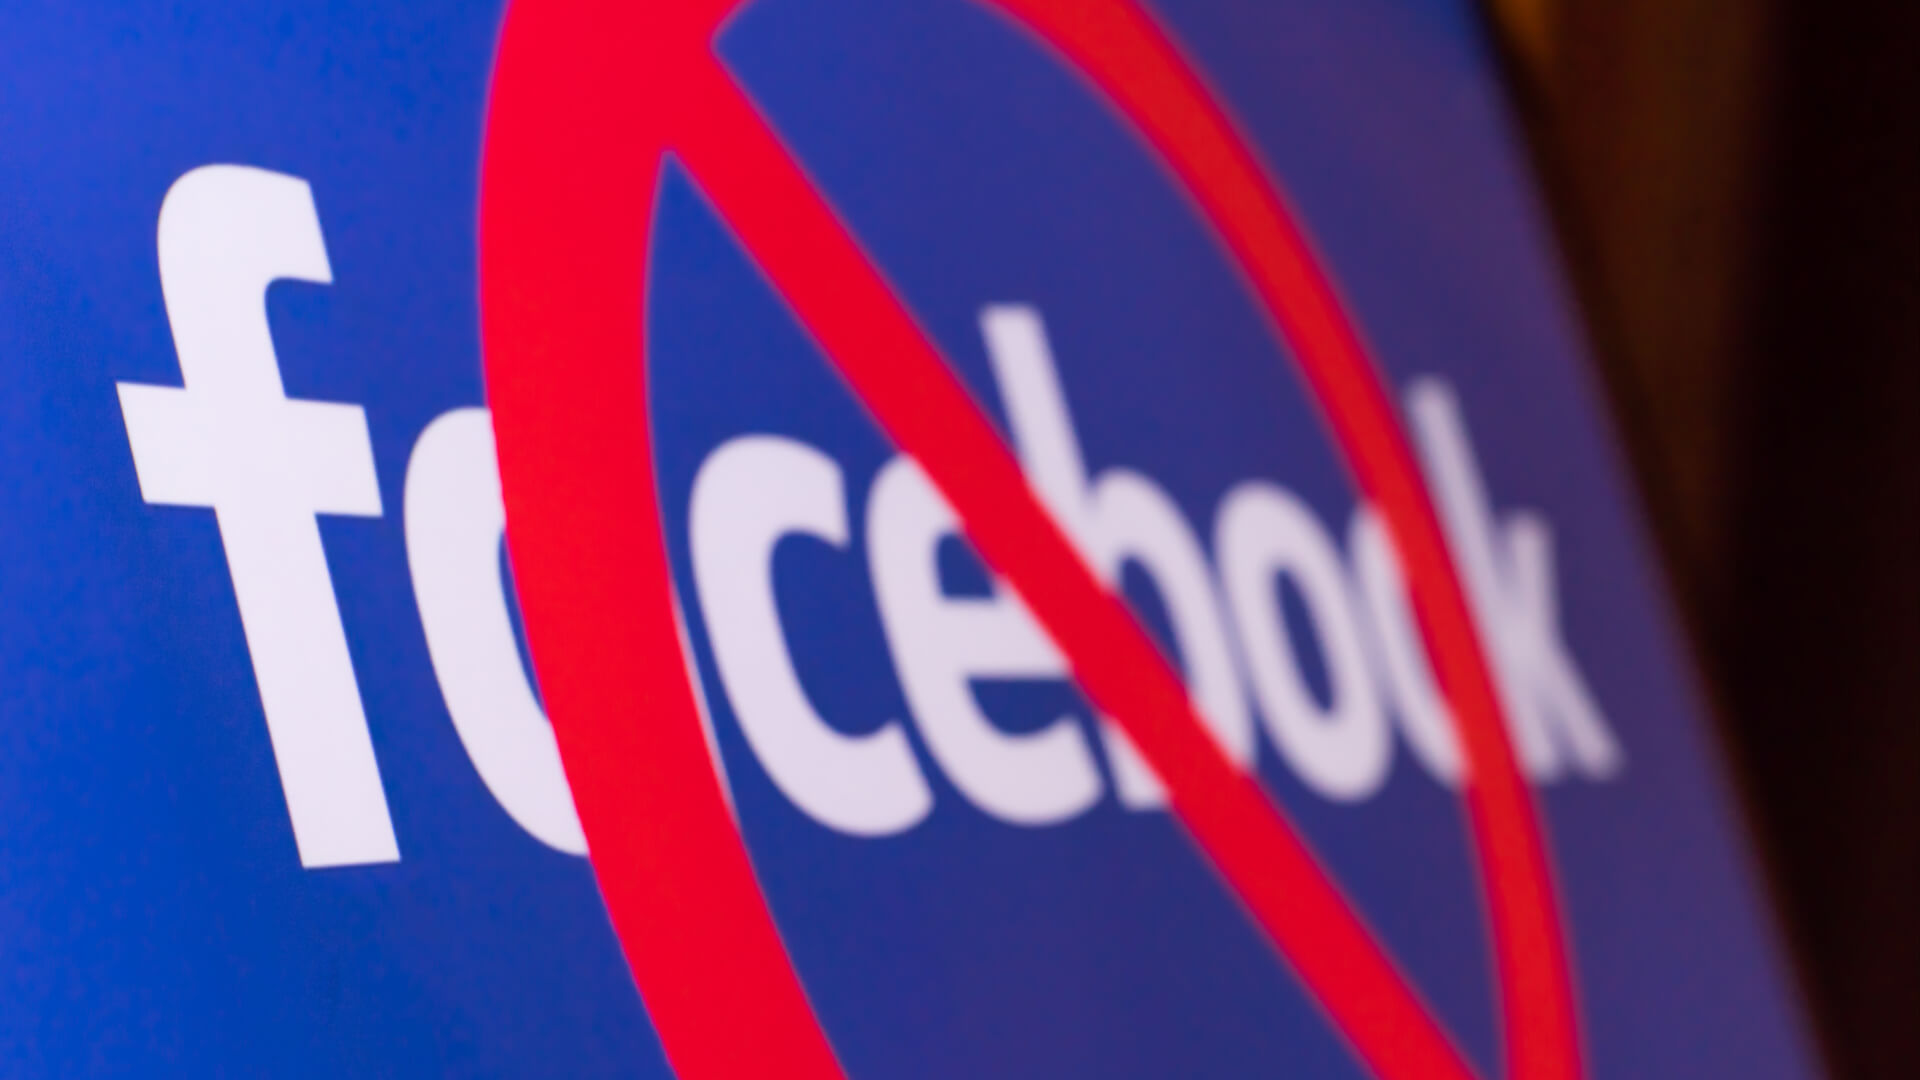 EU fines Facebook $1.3 billion for privacy violations